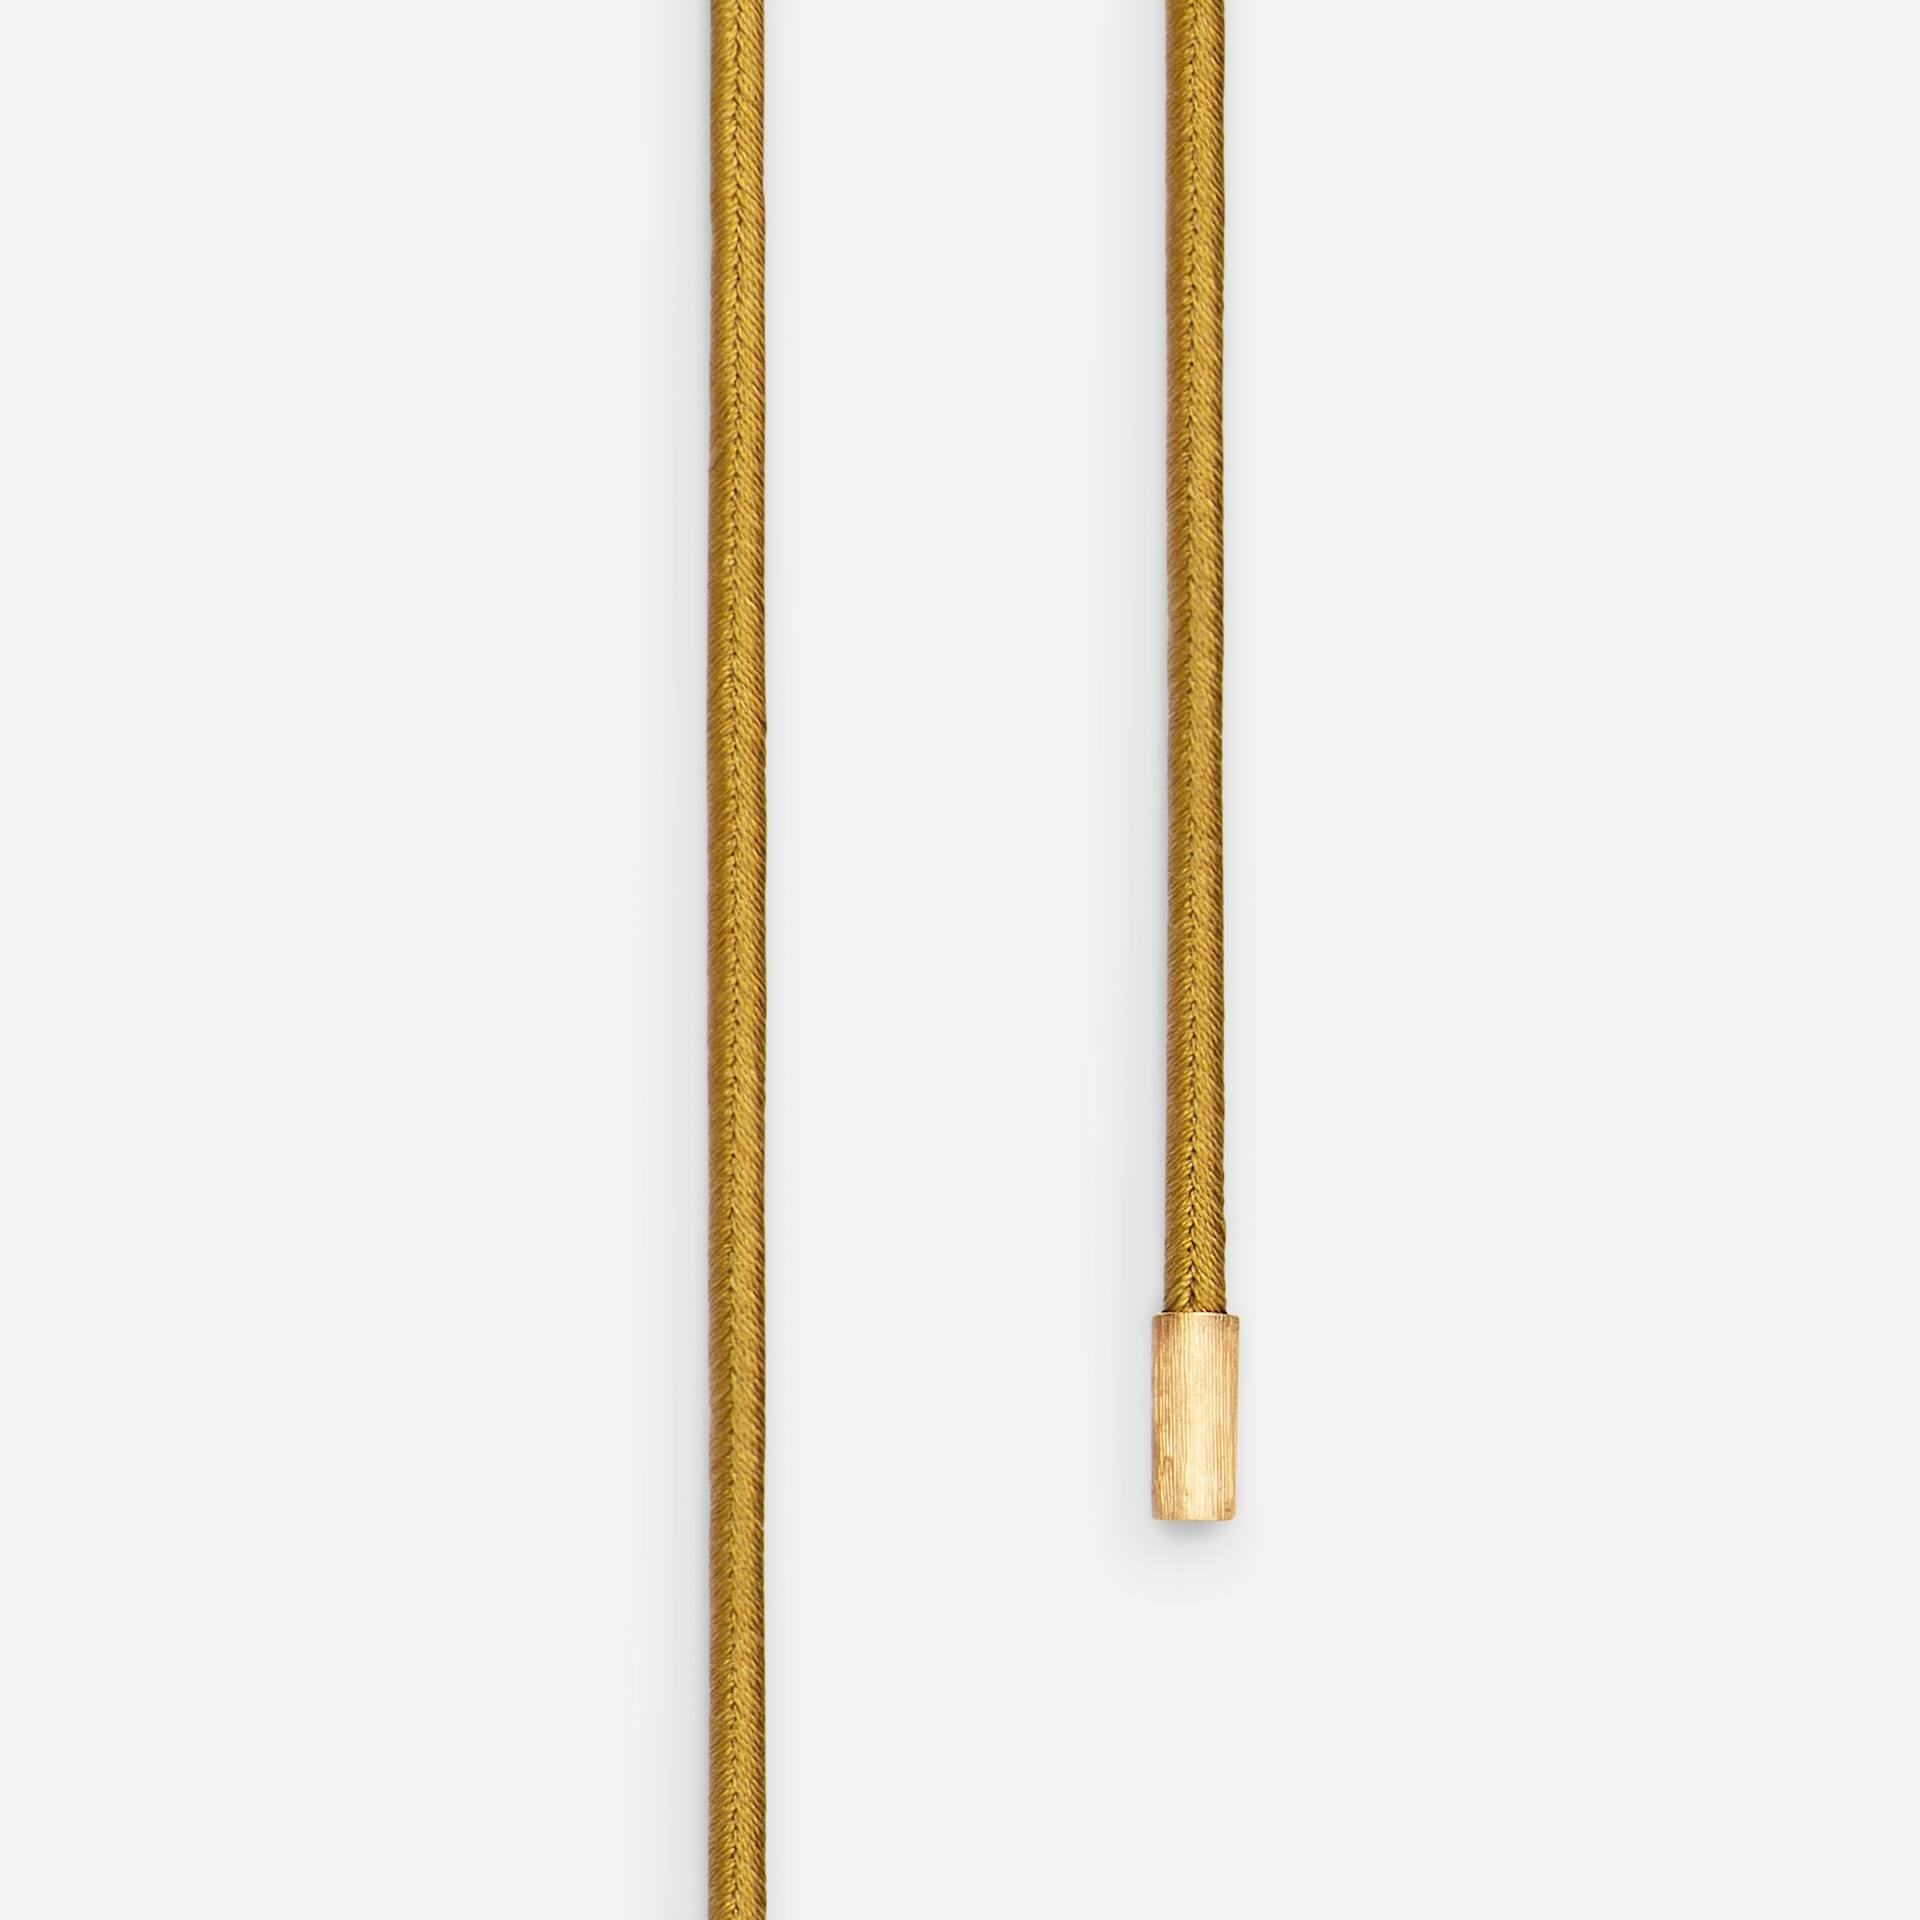 Silk String Necklace with 18 Karat Yellow Gold End Pieces  |  Ole Lynggaard Copenhagen 